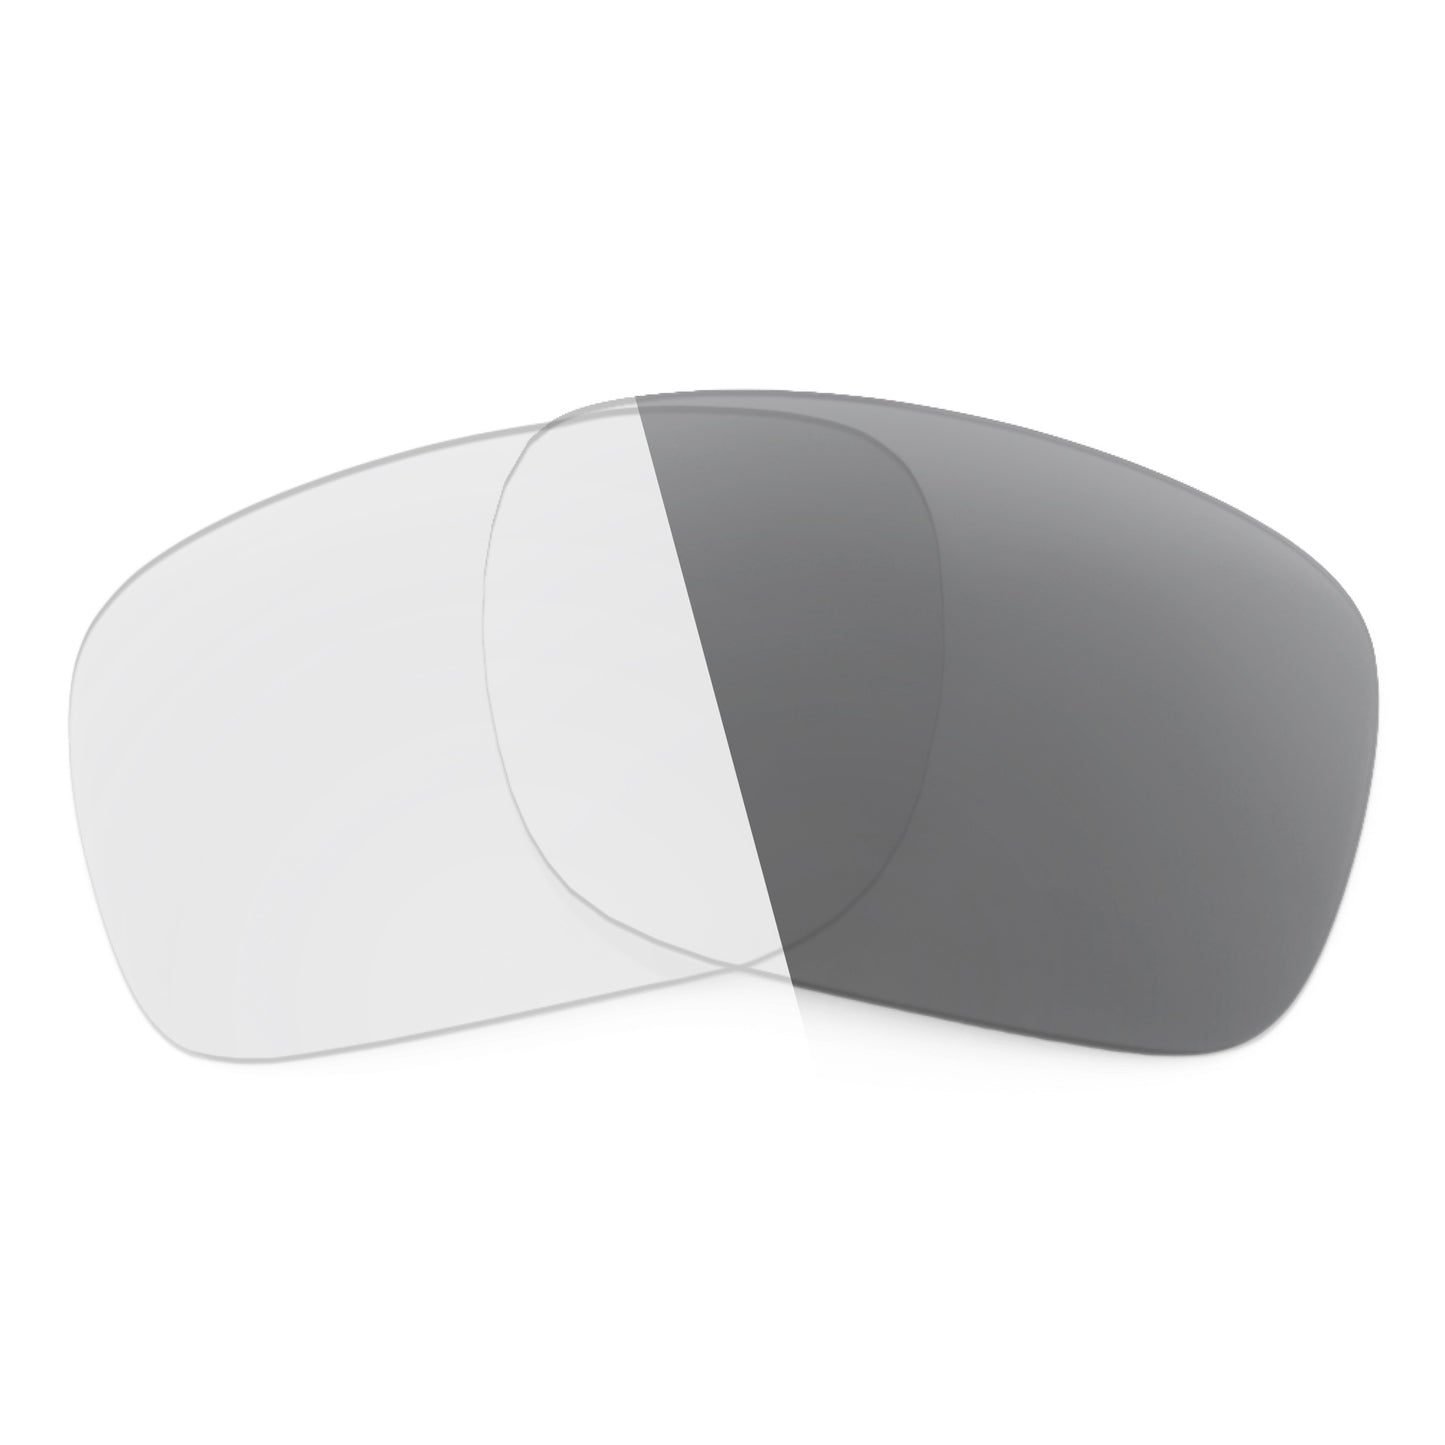 Revant replacement lenses for Spy Optic Montana (Low Bridge Fit) Non-Polarized Adapt Gray Photochromic